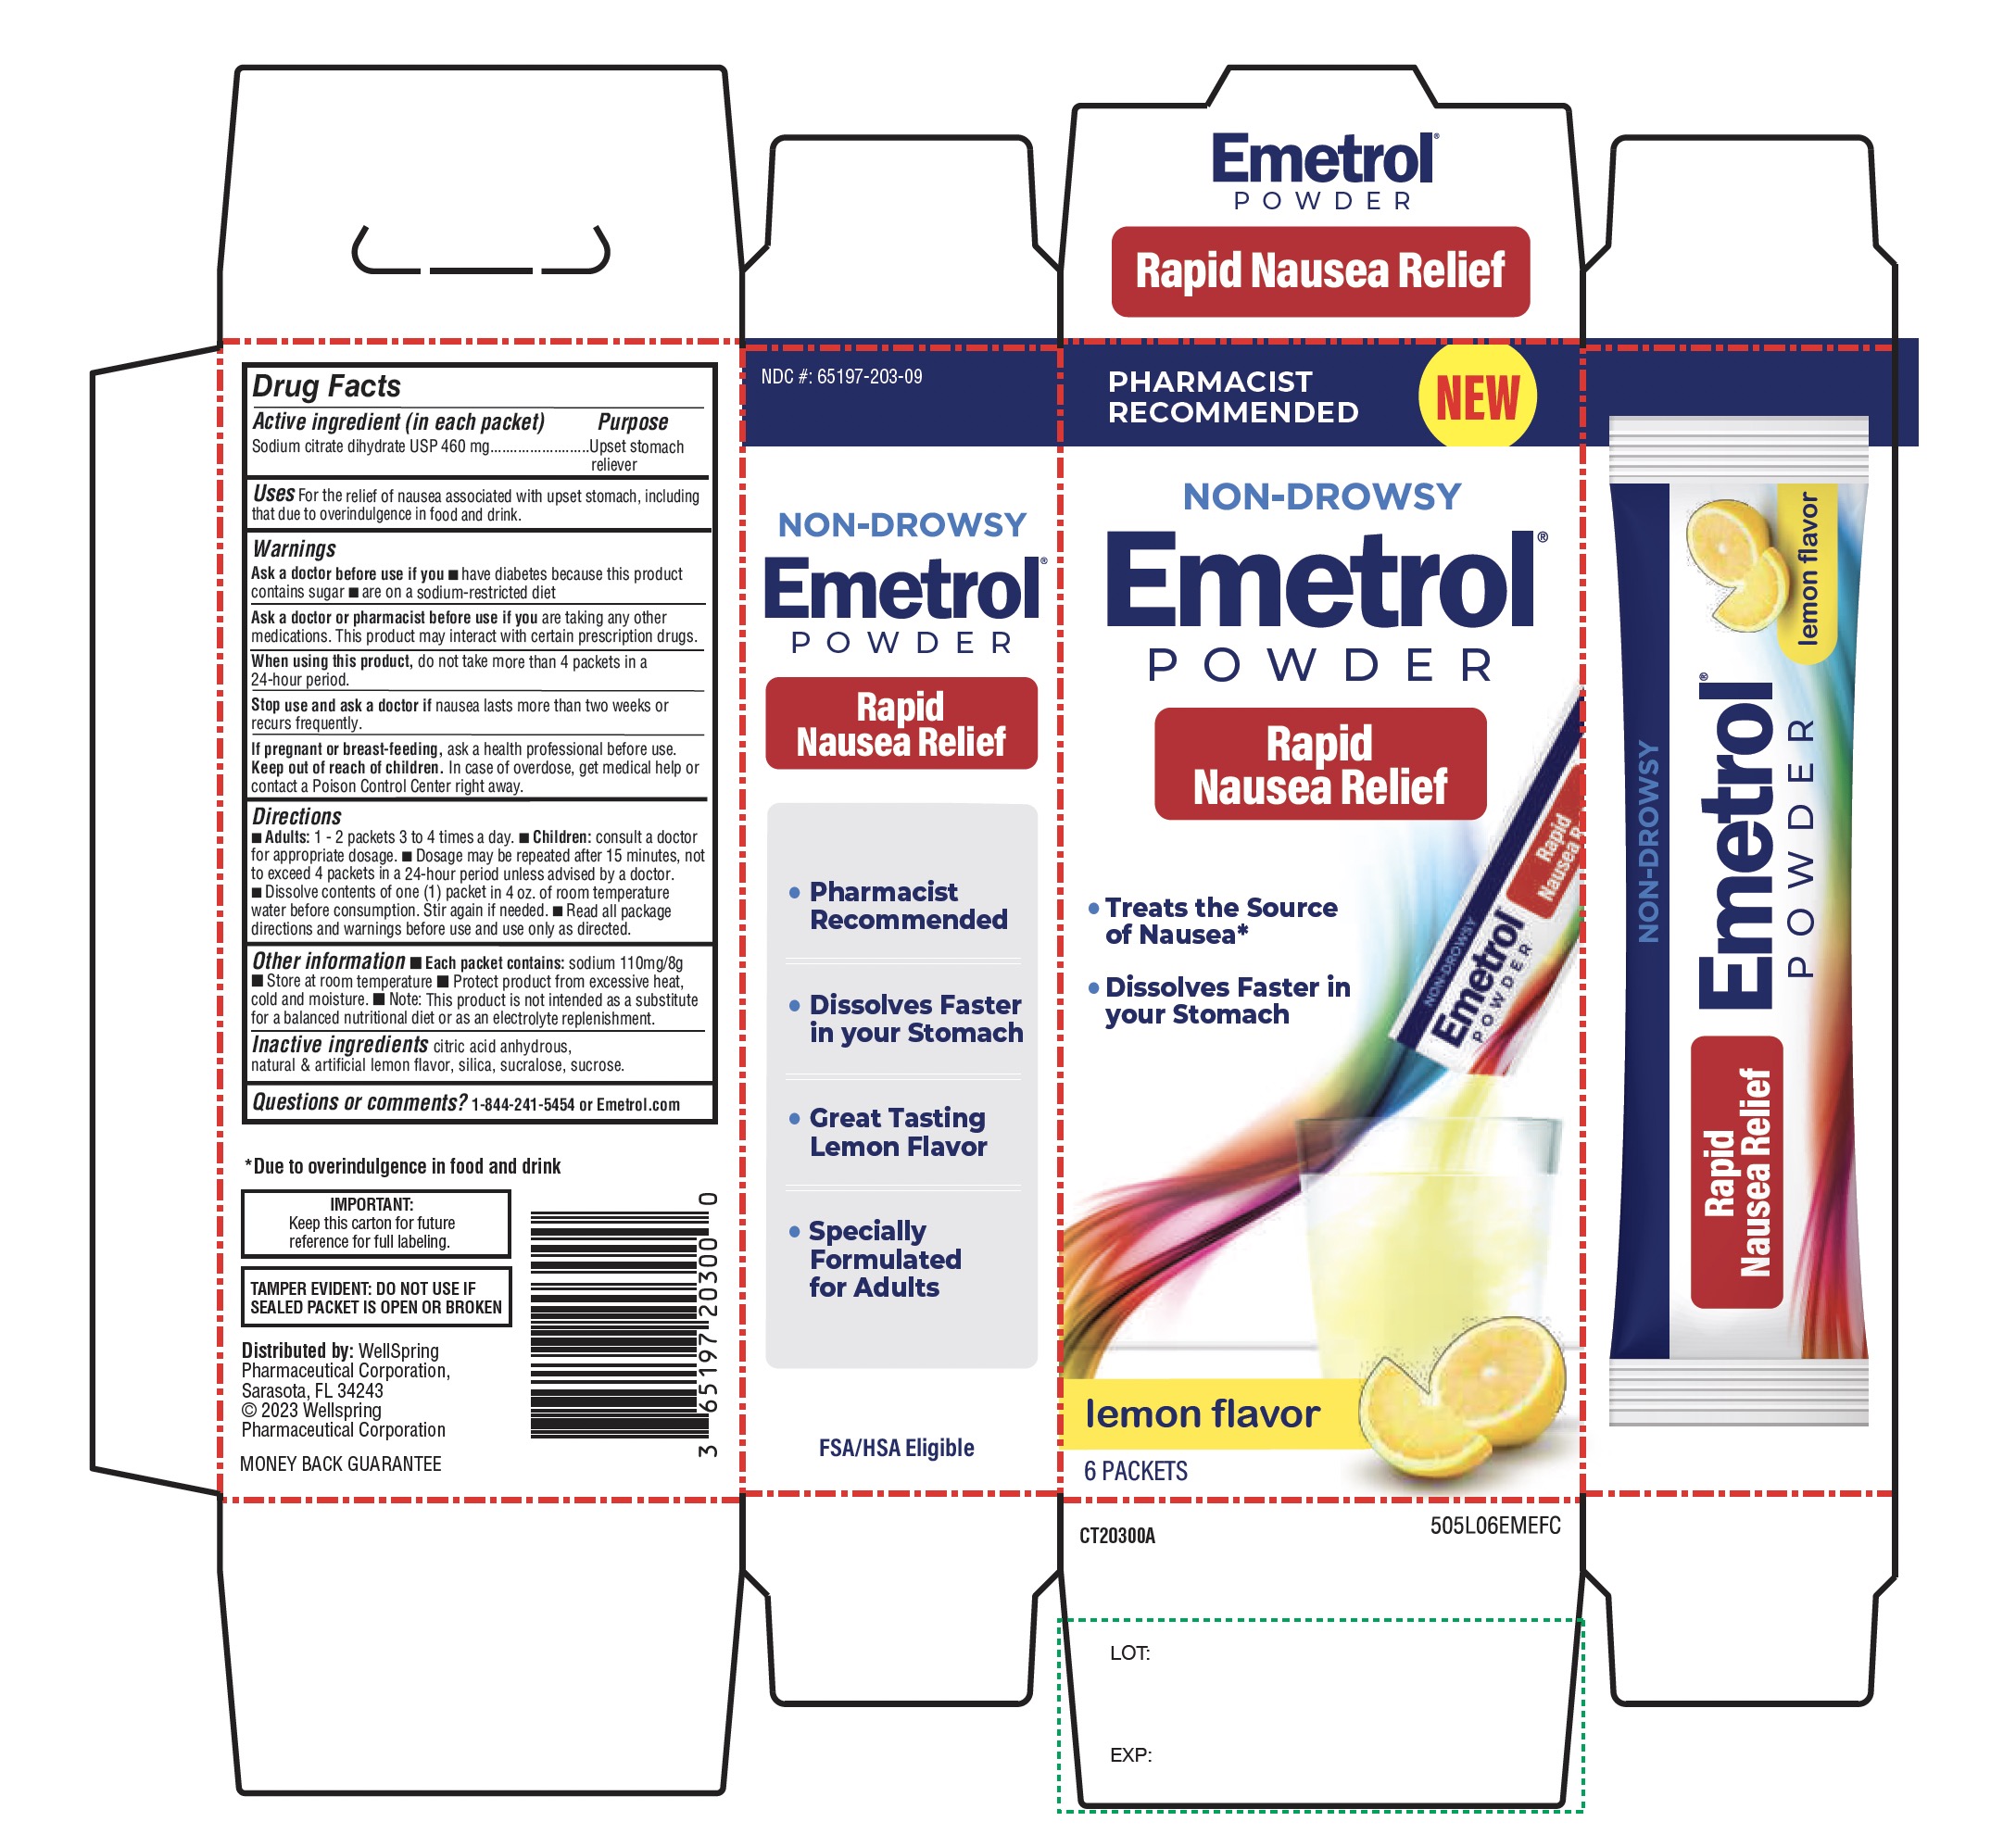 Emetrol non-drowsy rapid Nausea Relief 6 packets lemon flavor